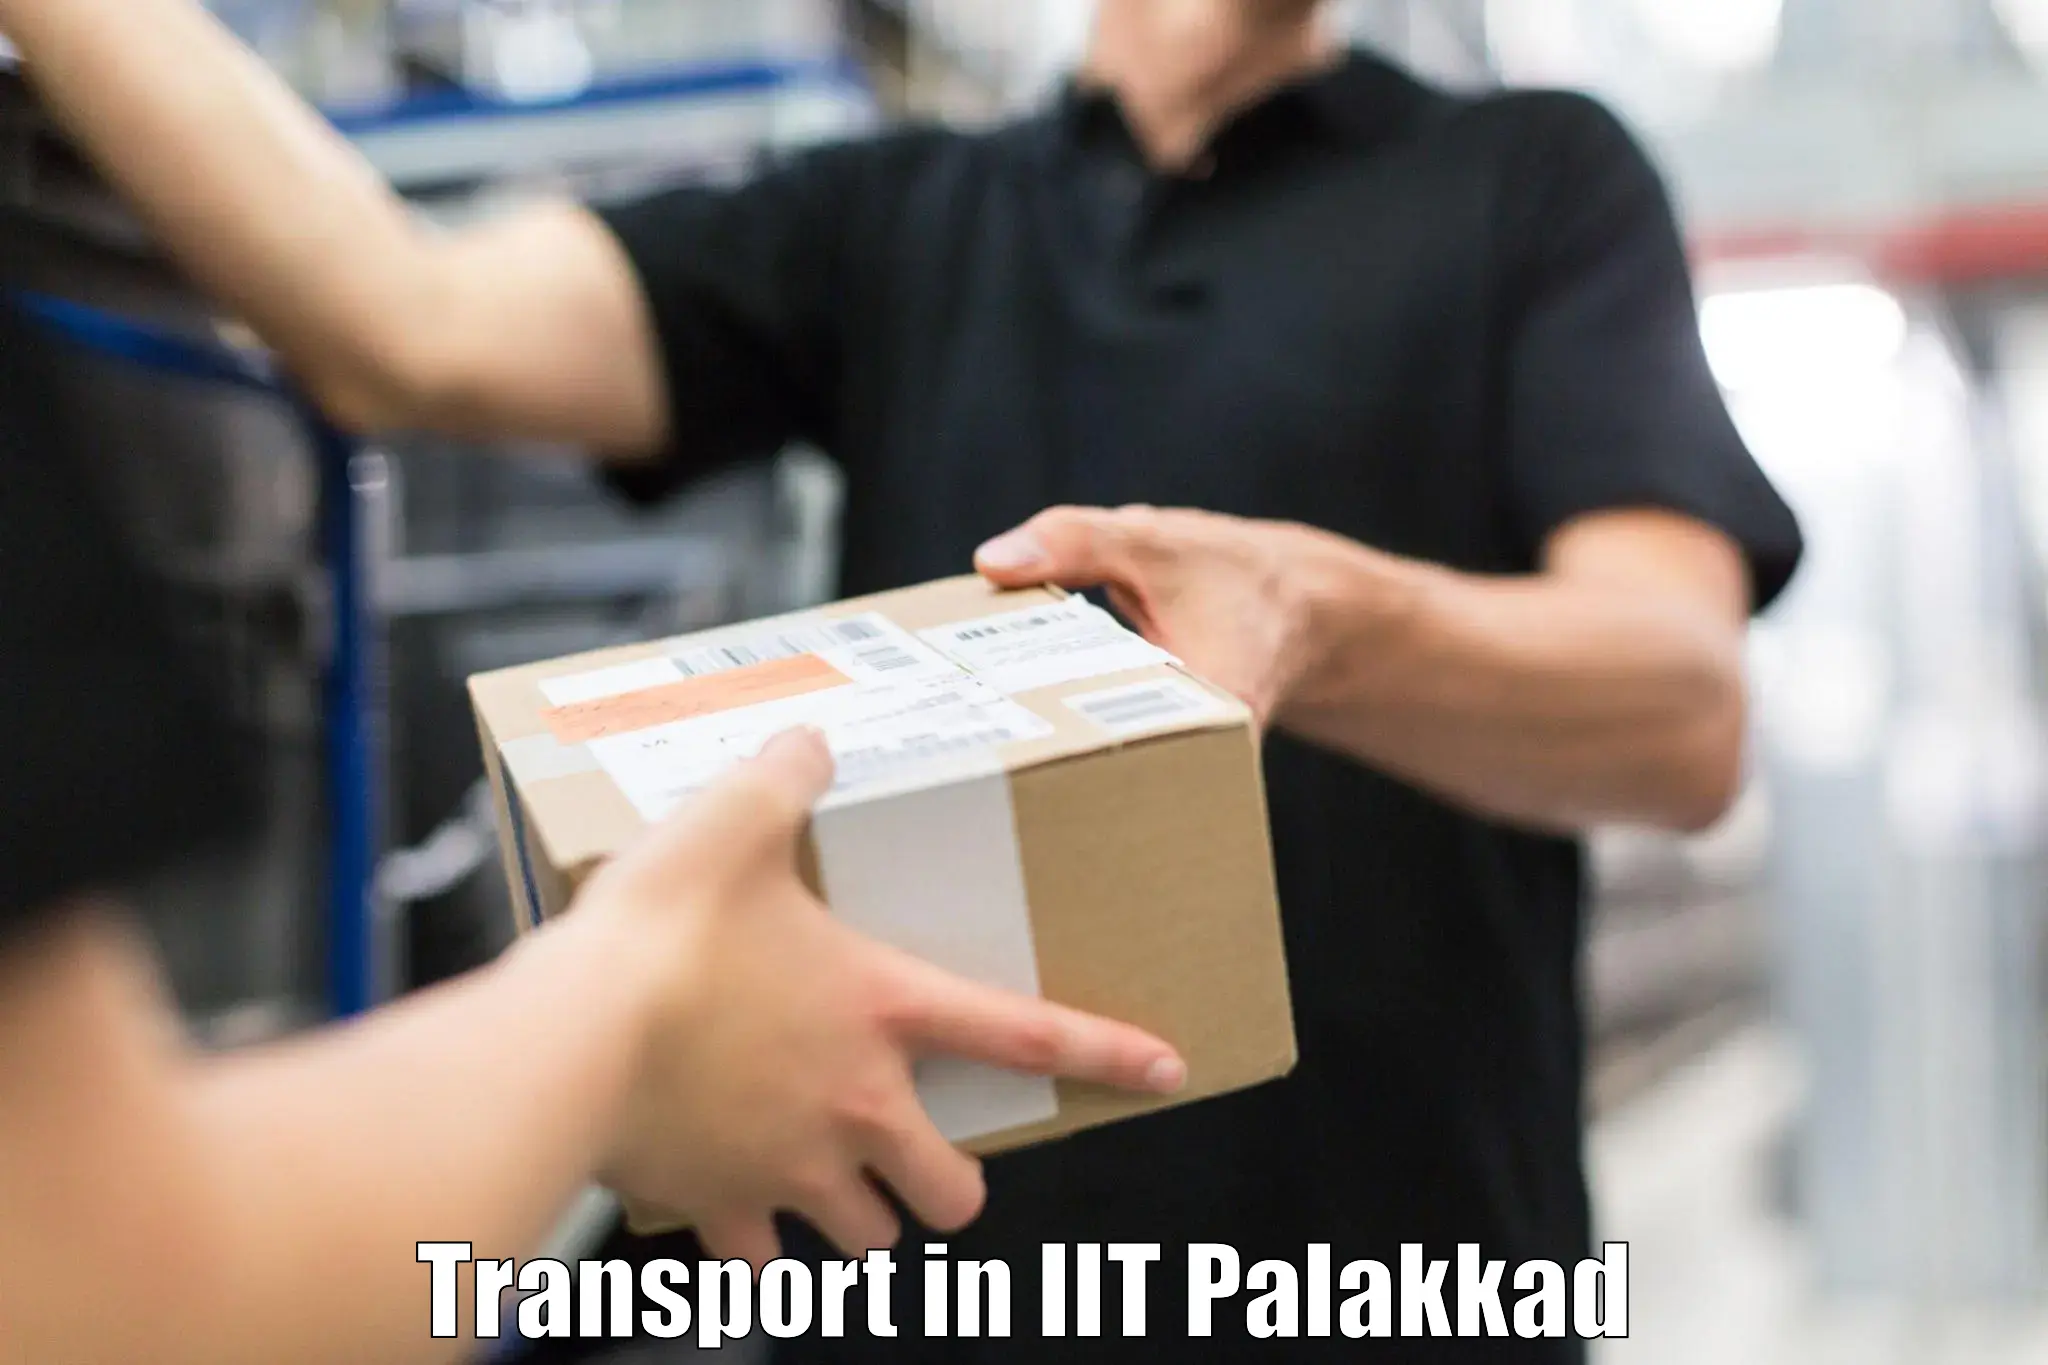 Vehicle transport services in IIT Palakkad